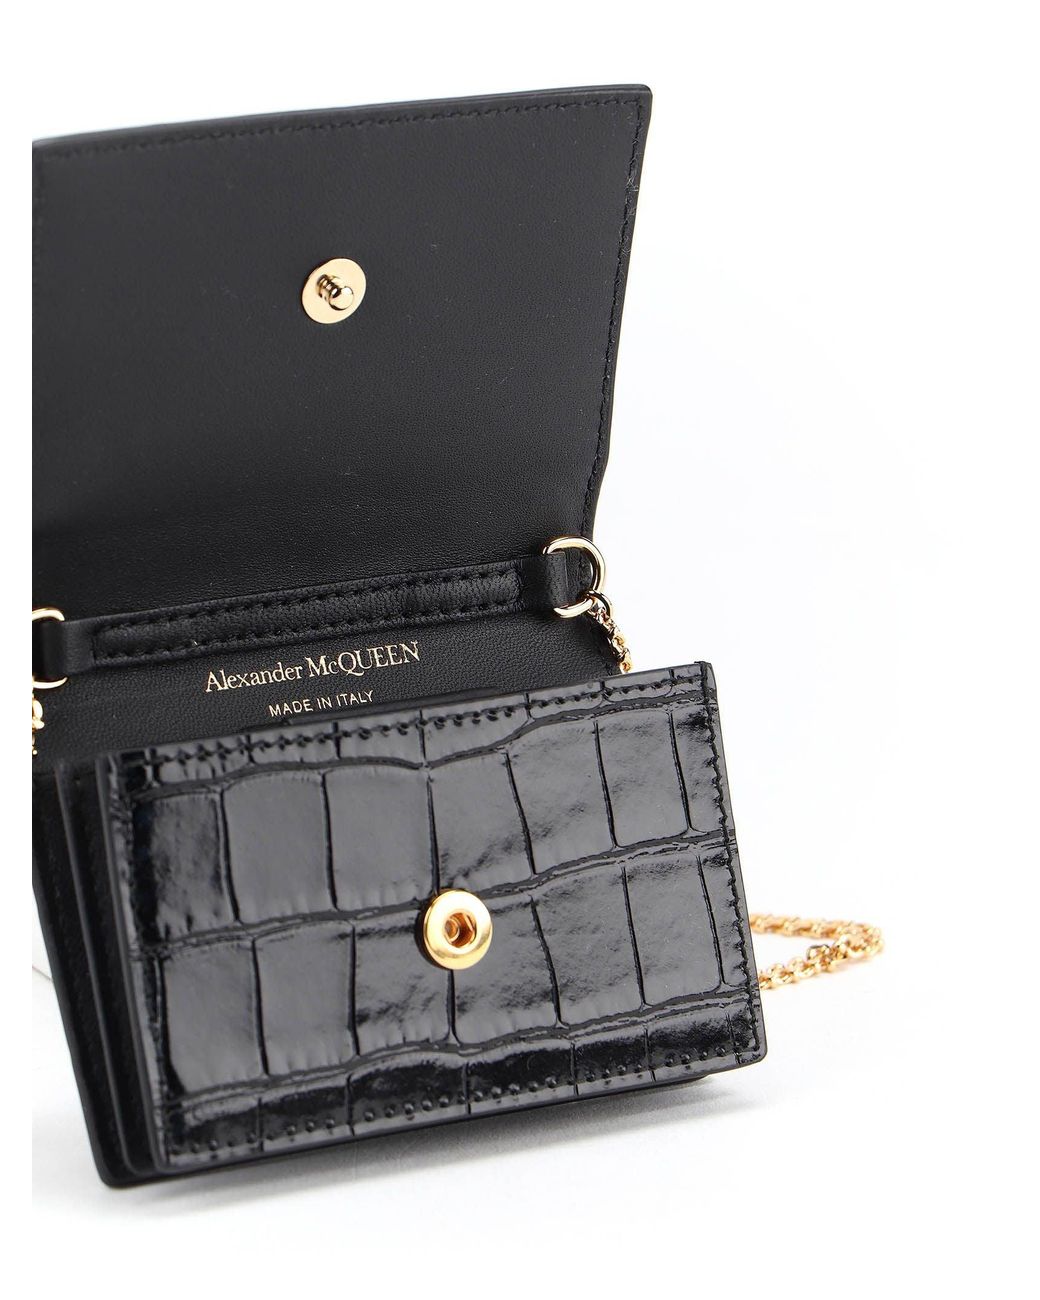 Alexander McQueen Leather Wallet in Black - Save 46% | Lyst